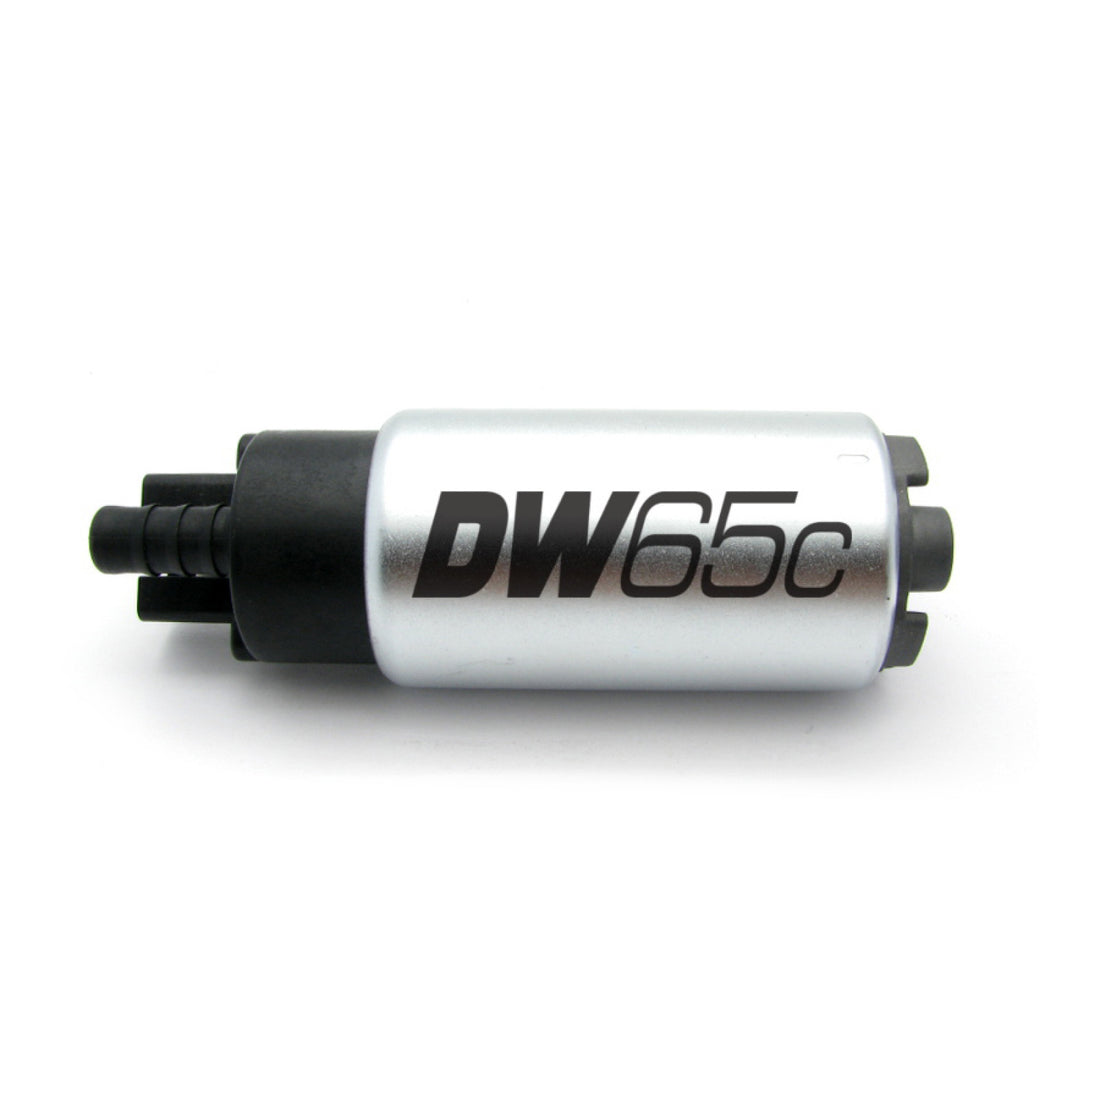 Deatschwerks DW65C 265lph Fuel Pump for 13-15 Scion FRS, 15-18 Subaru WRX Models